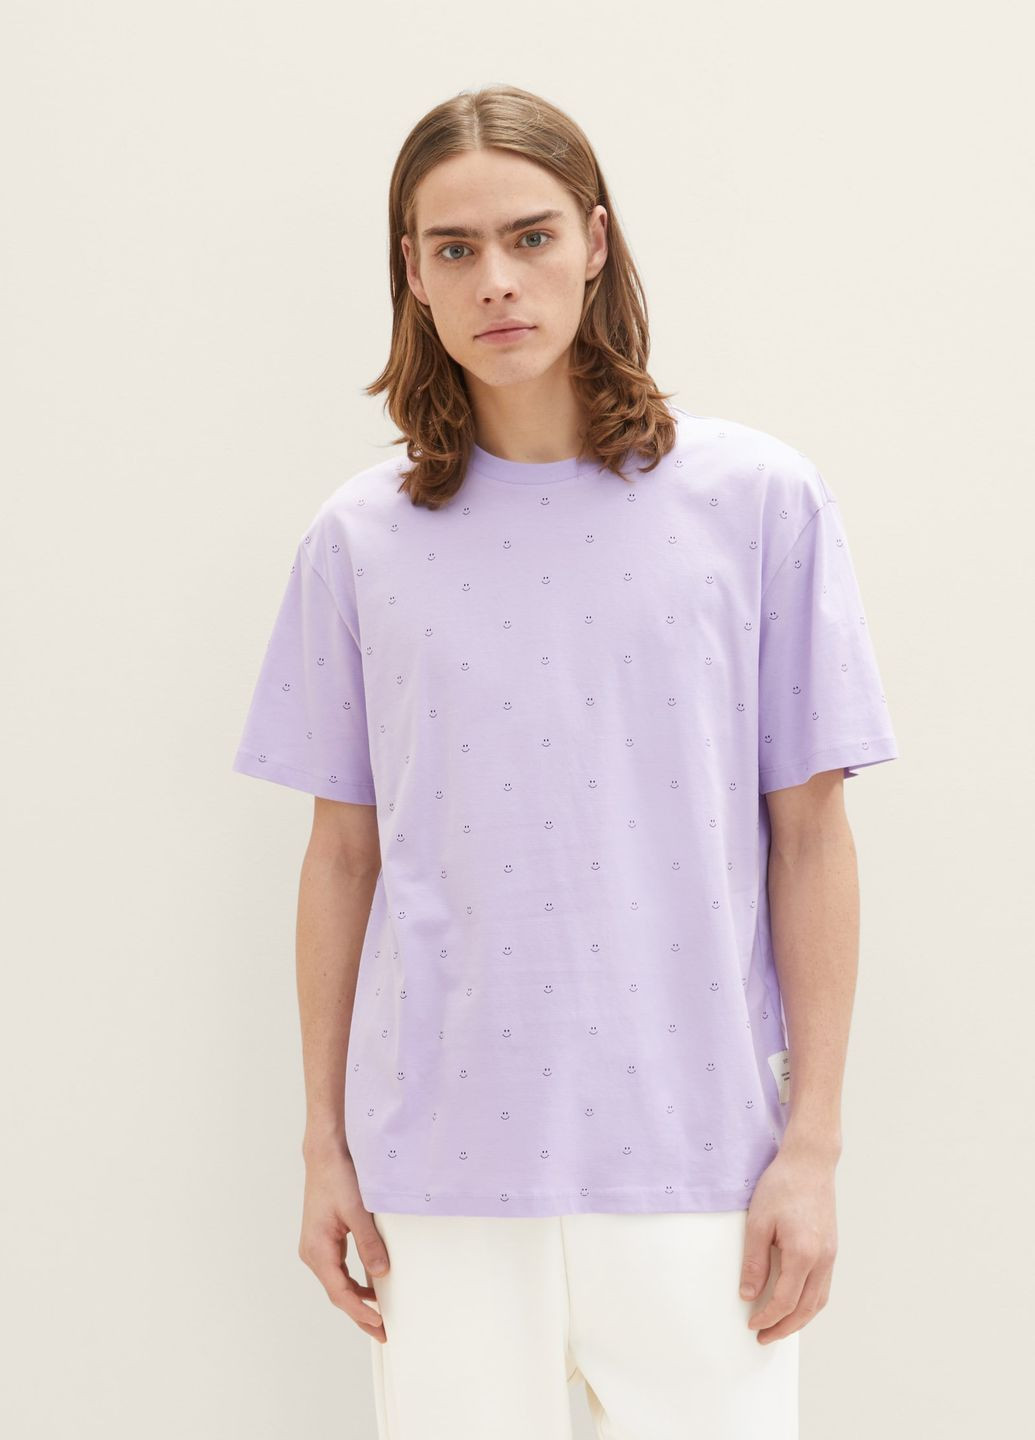 Фіолетова футболка Tom Tailor